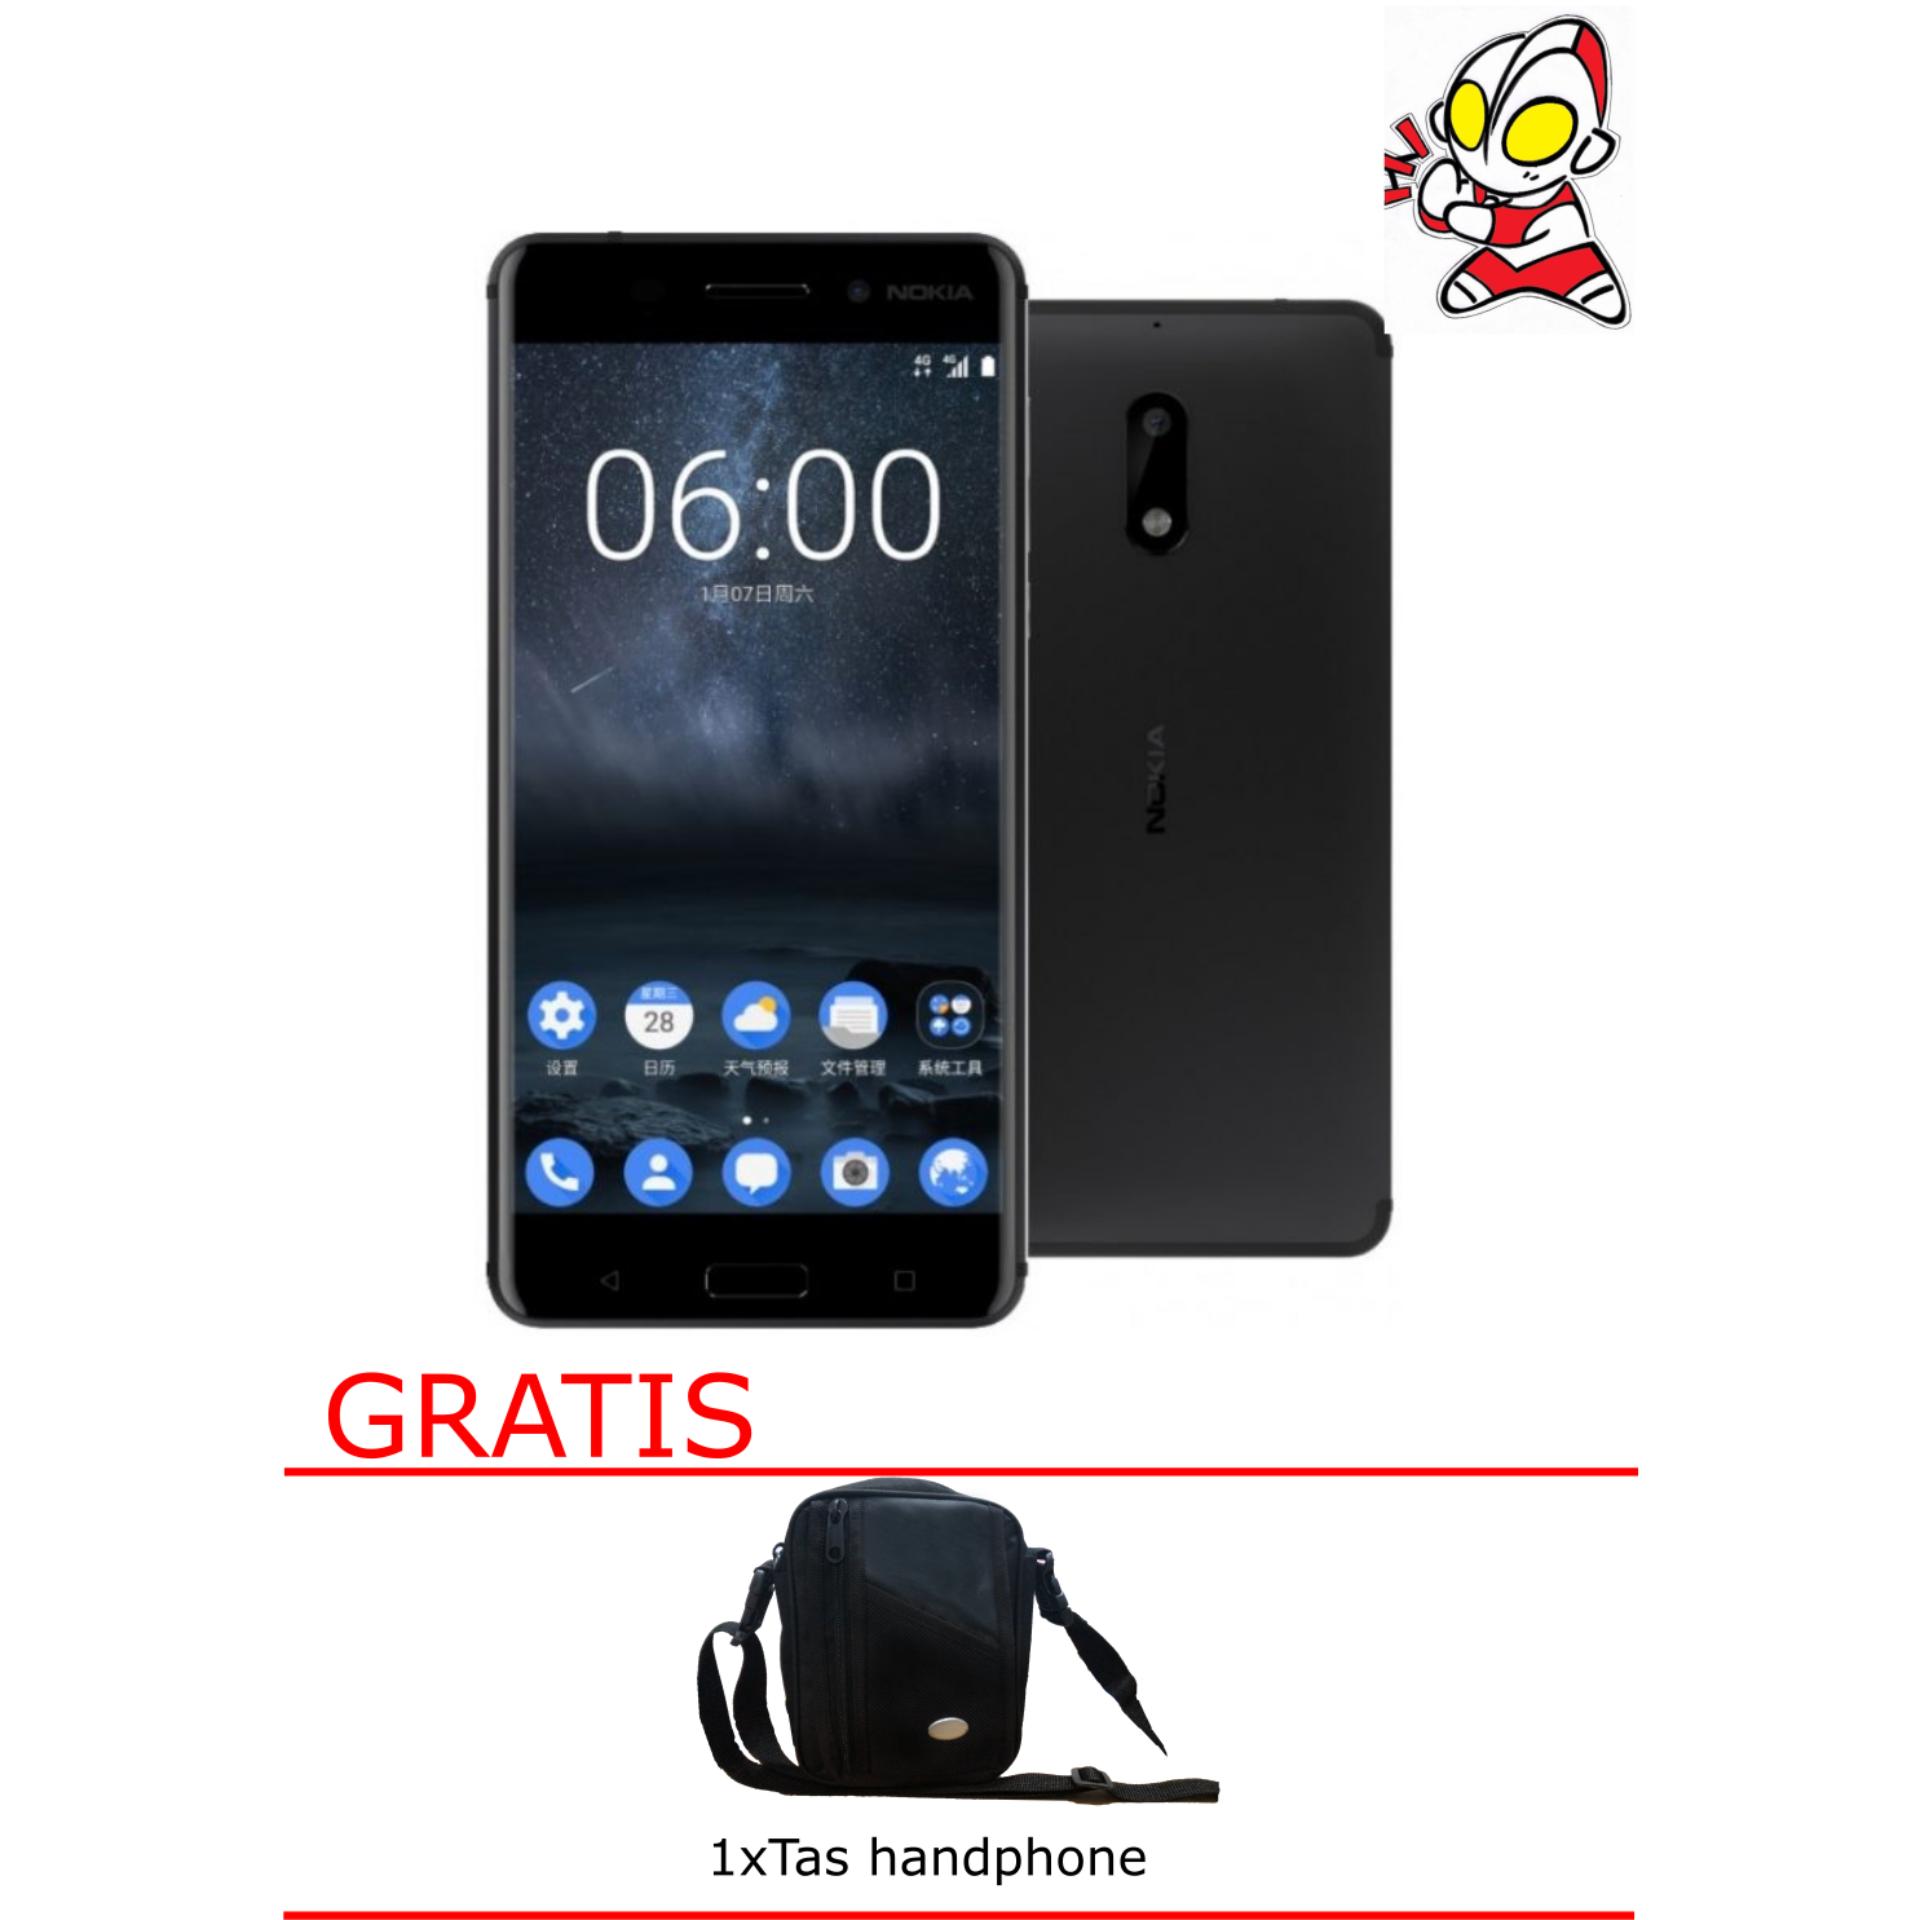 Nokia 3 Black 16GB Black Free Tas Handphone Garansi Resmi Nokia Indonesia